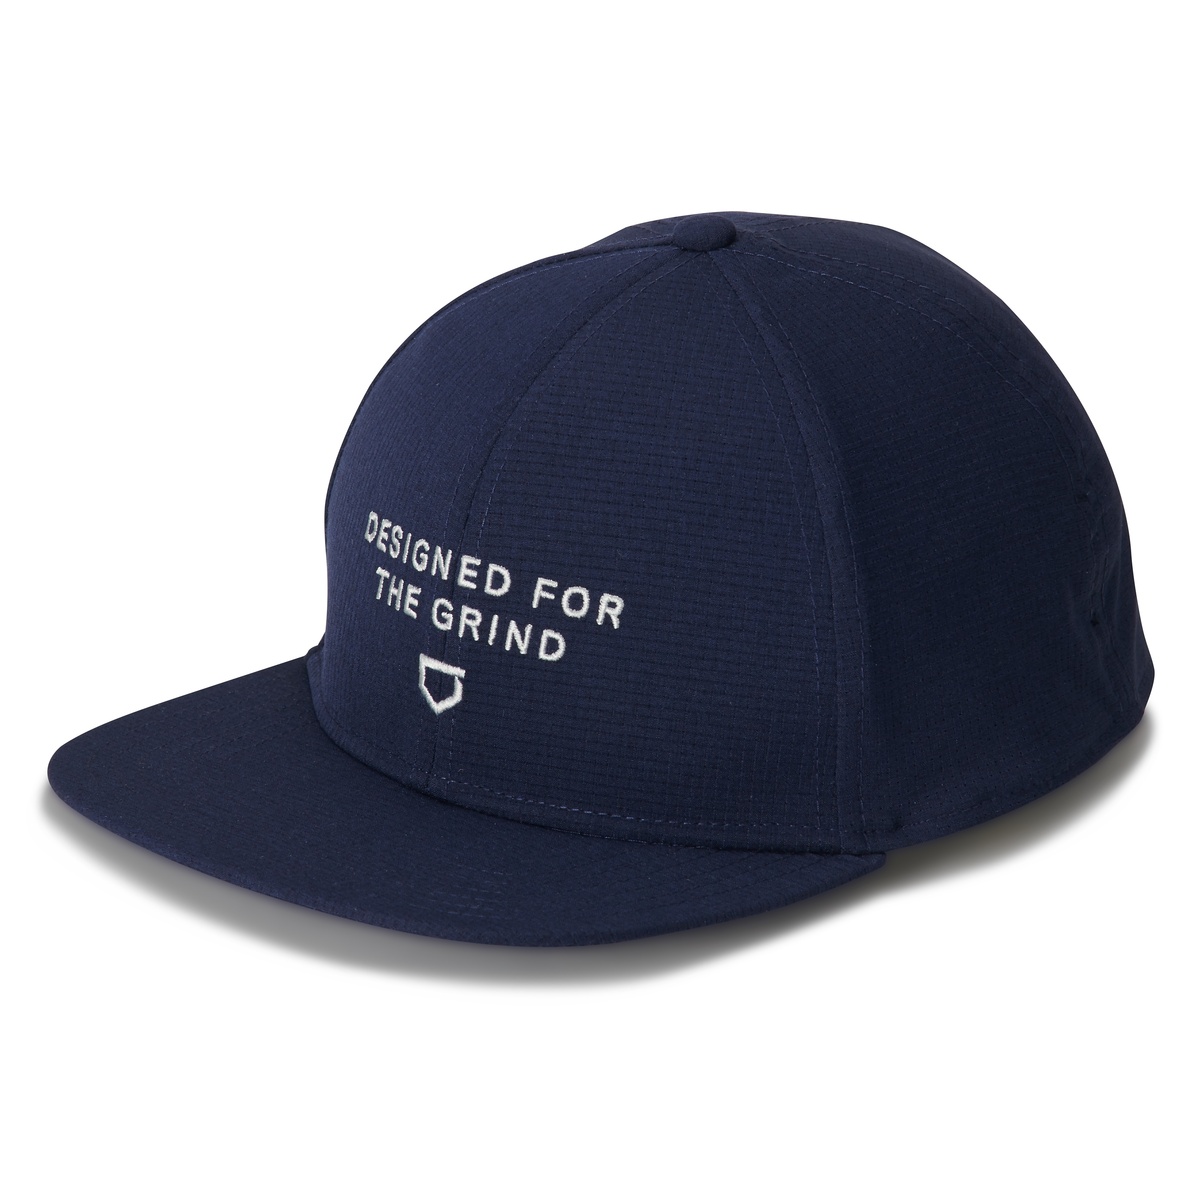 35％OFF アンダーアーマー 野球 帽子 キャップ 練習着 UA CAP 410 史上一番安い メンズ 1371978 ARMOUR ONESIZE UNDER